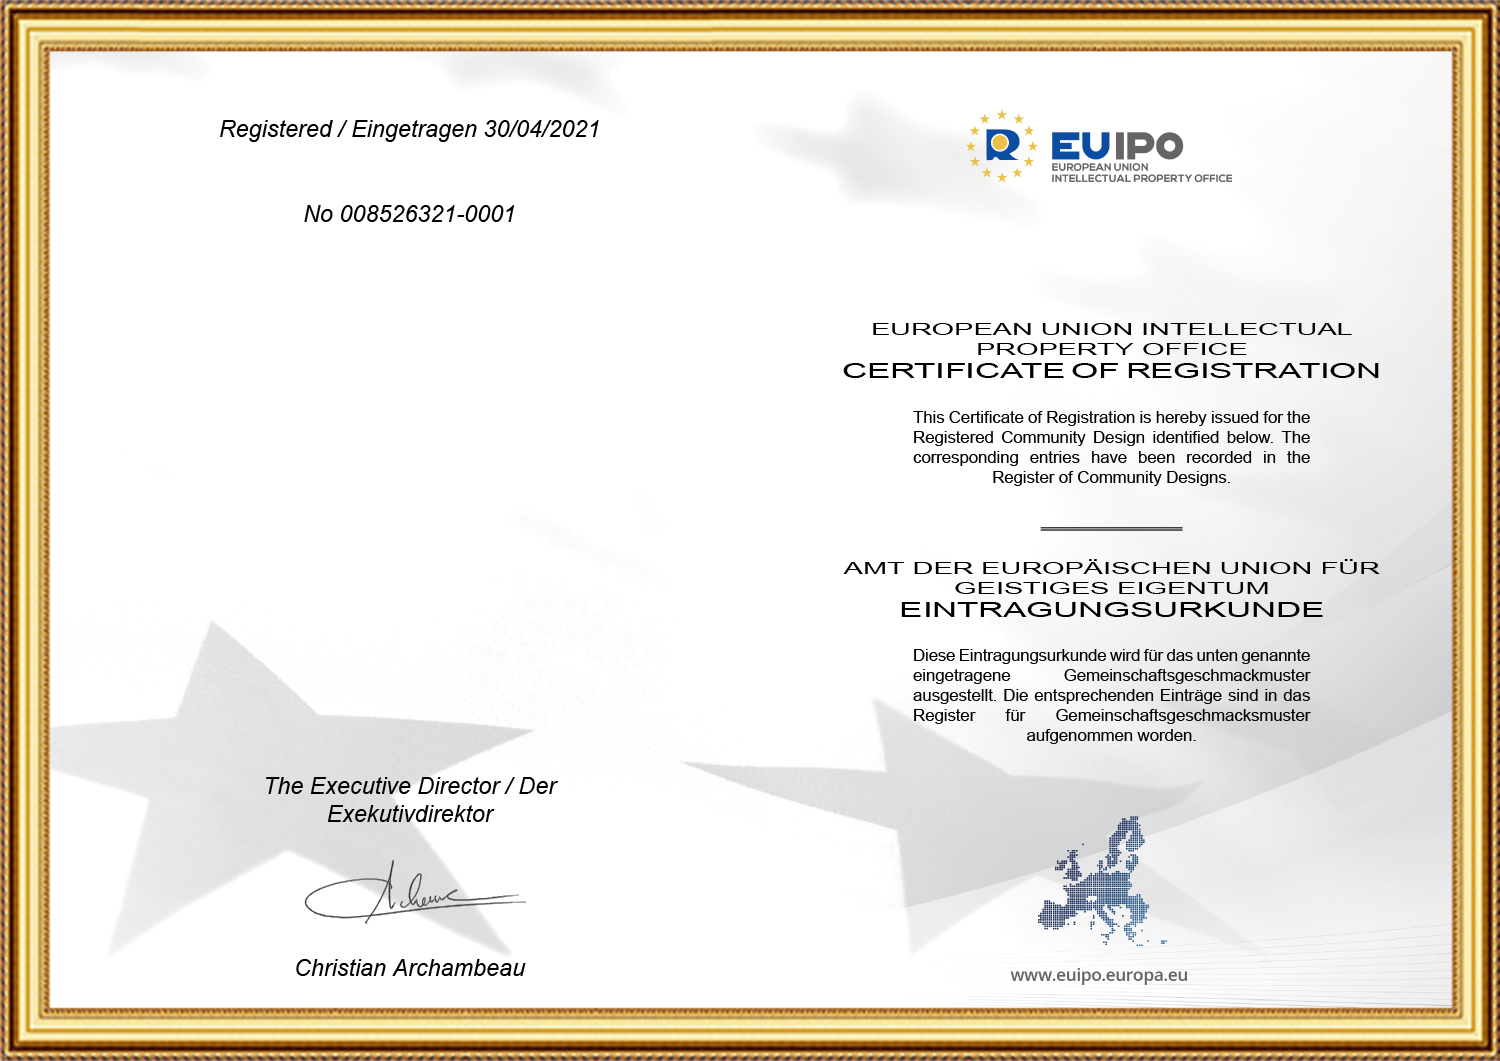 Semlamp IPL Hair Removal Device SL-B126 EU Appearance Design Patent Certificate